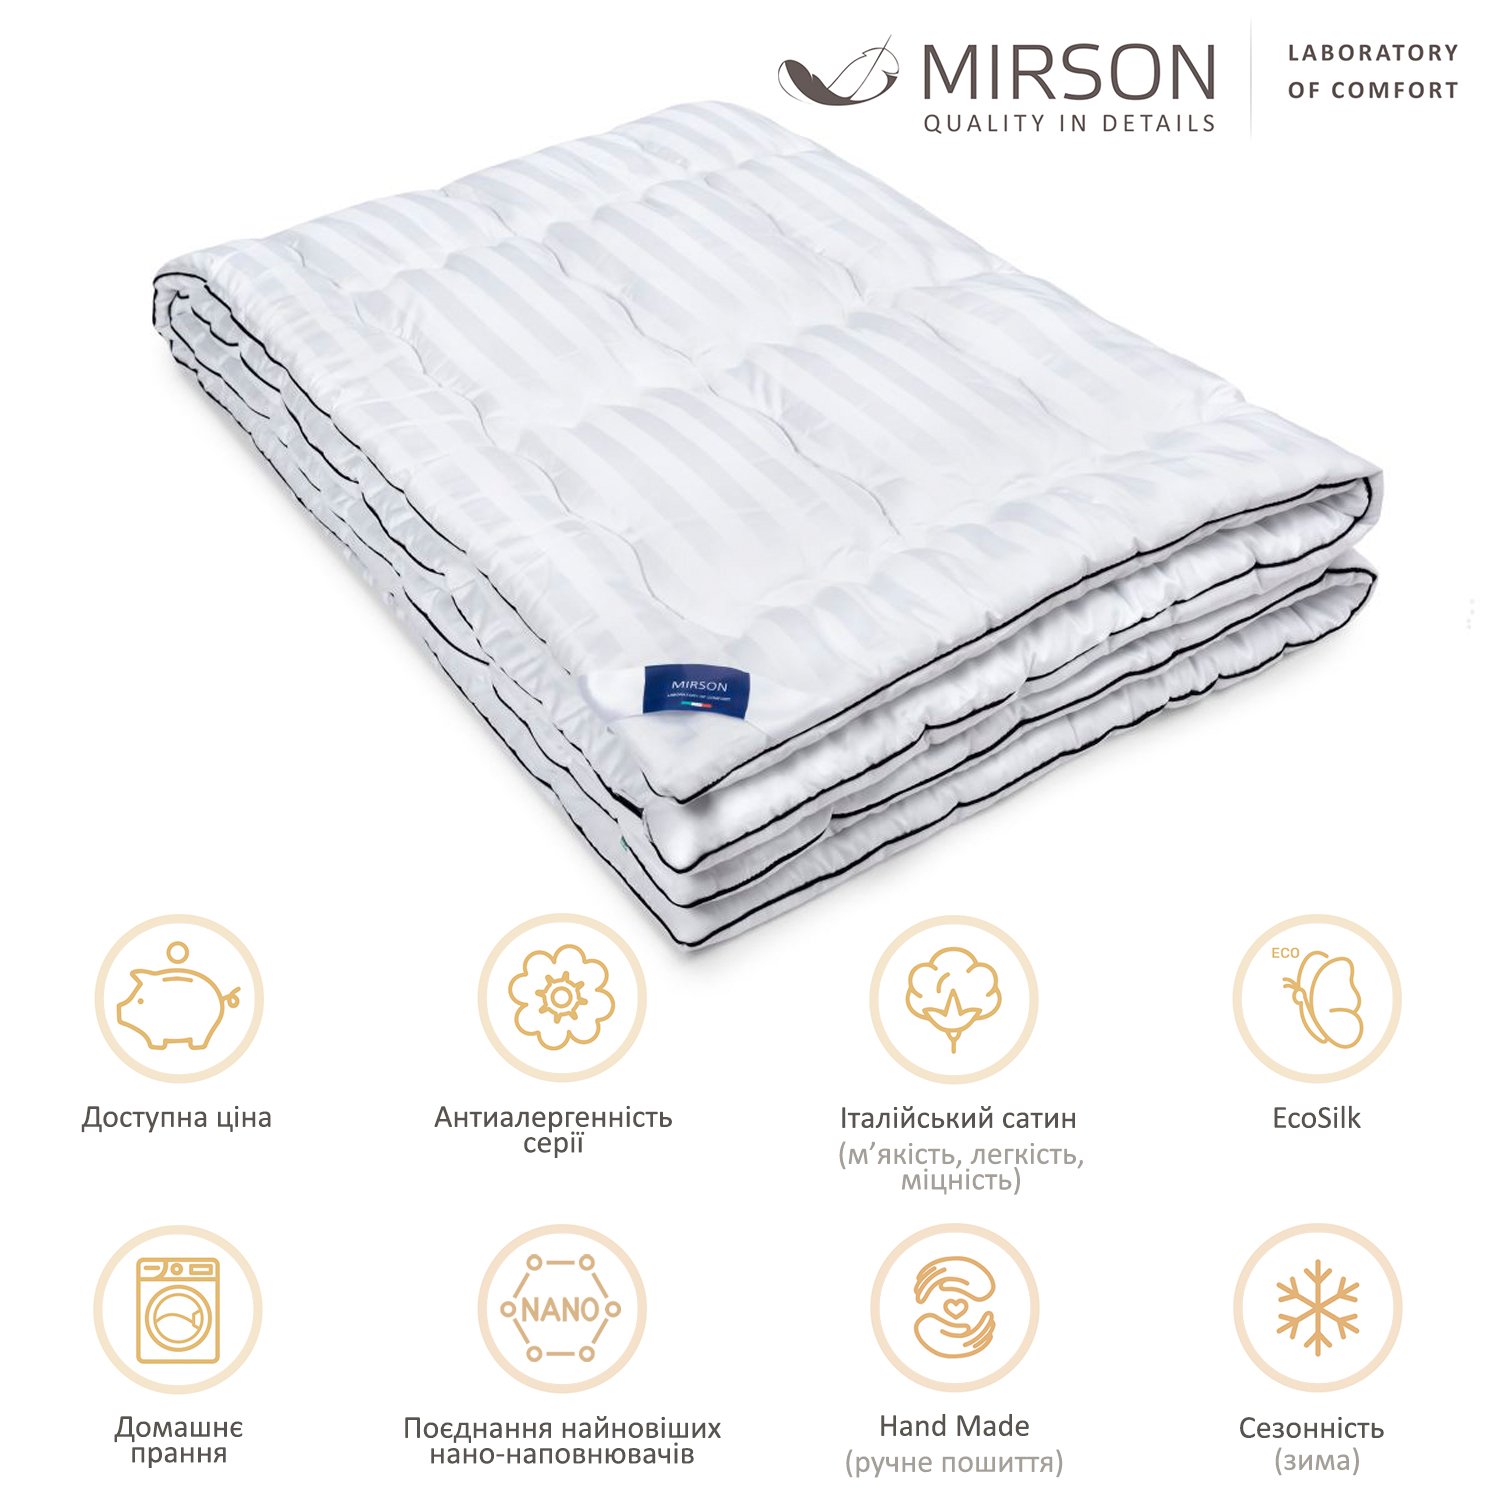 Одеяло антиаллергенное MirSon Premium Royal Pearl Hand Made №069, зимнее, 220x240 см, белое (58590082) - фото 5